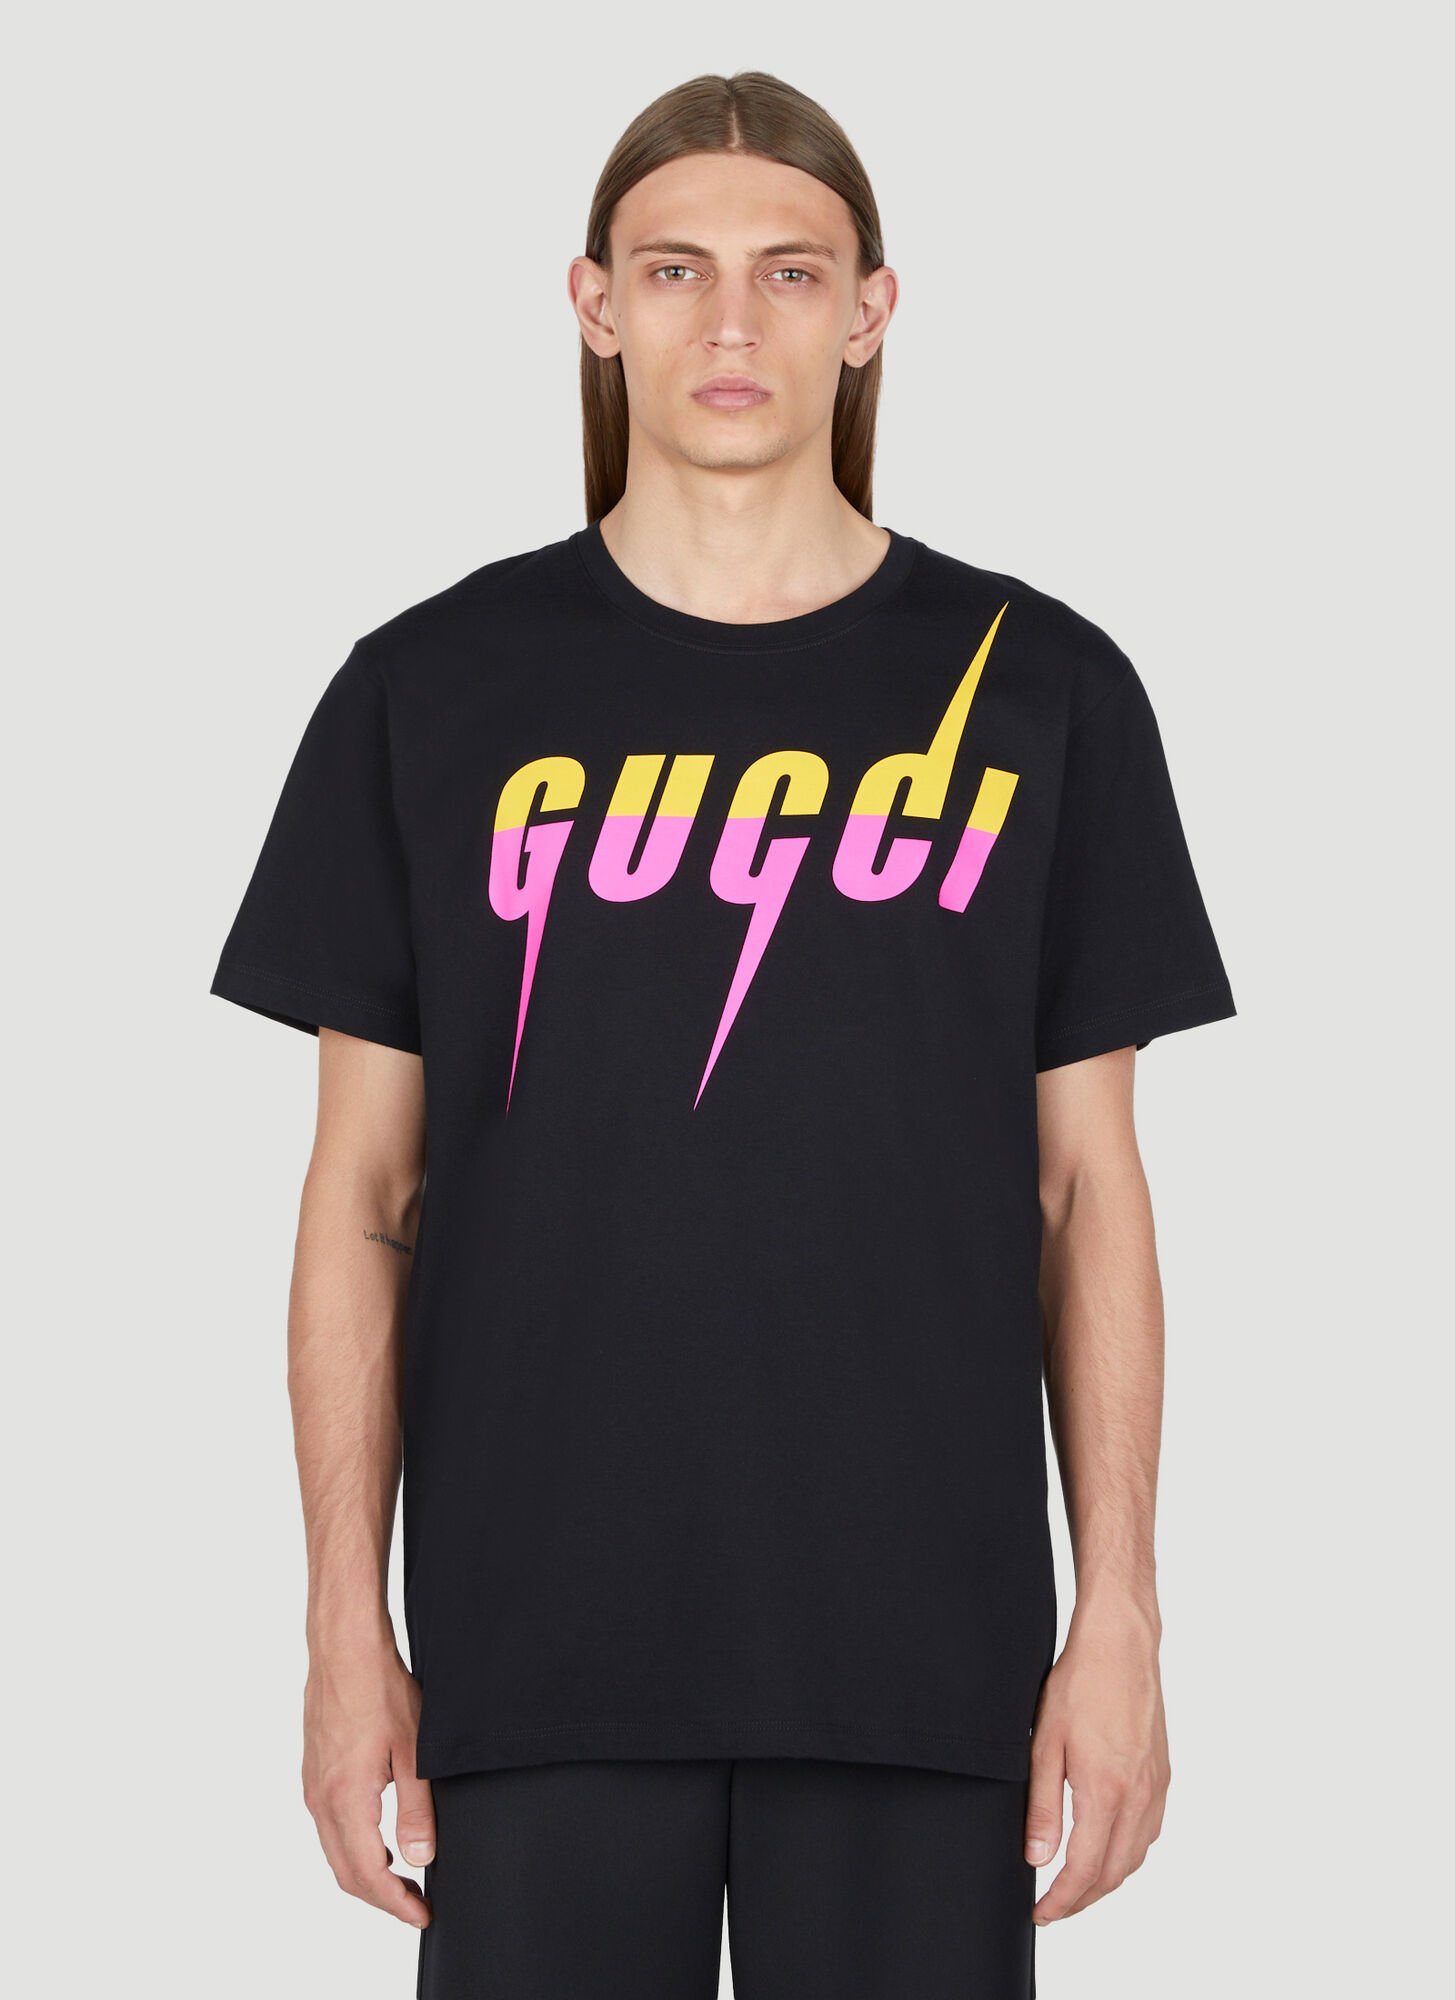 Gucci Gucci Blade Cotton T-shirt - Farfetch